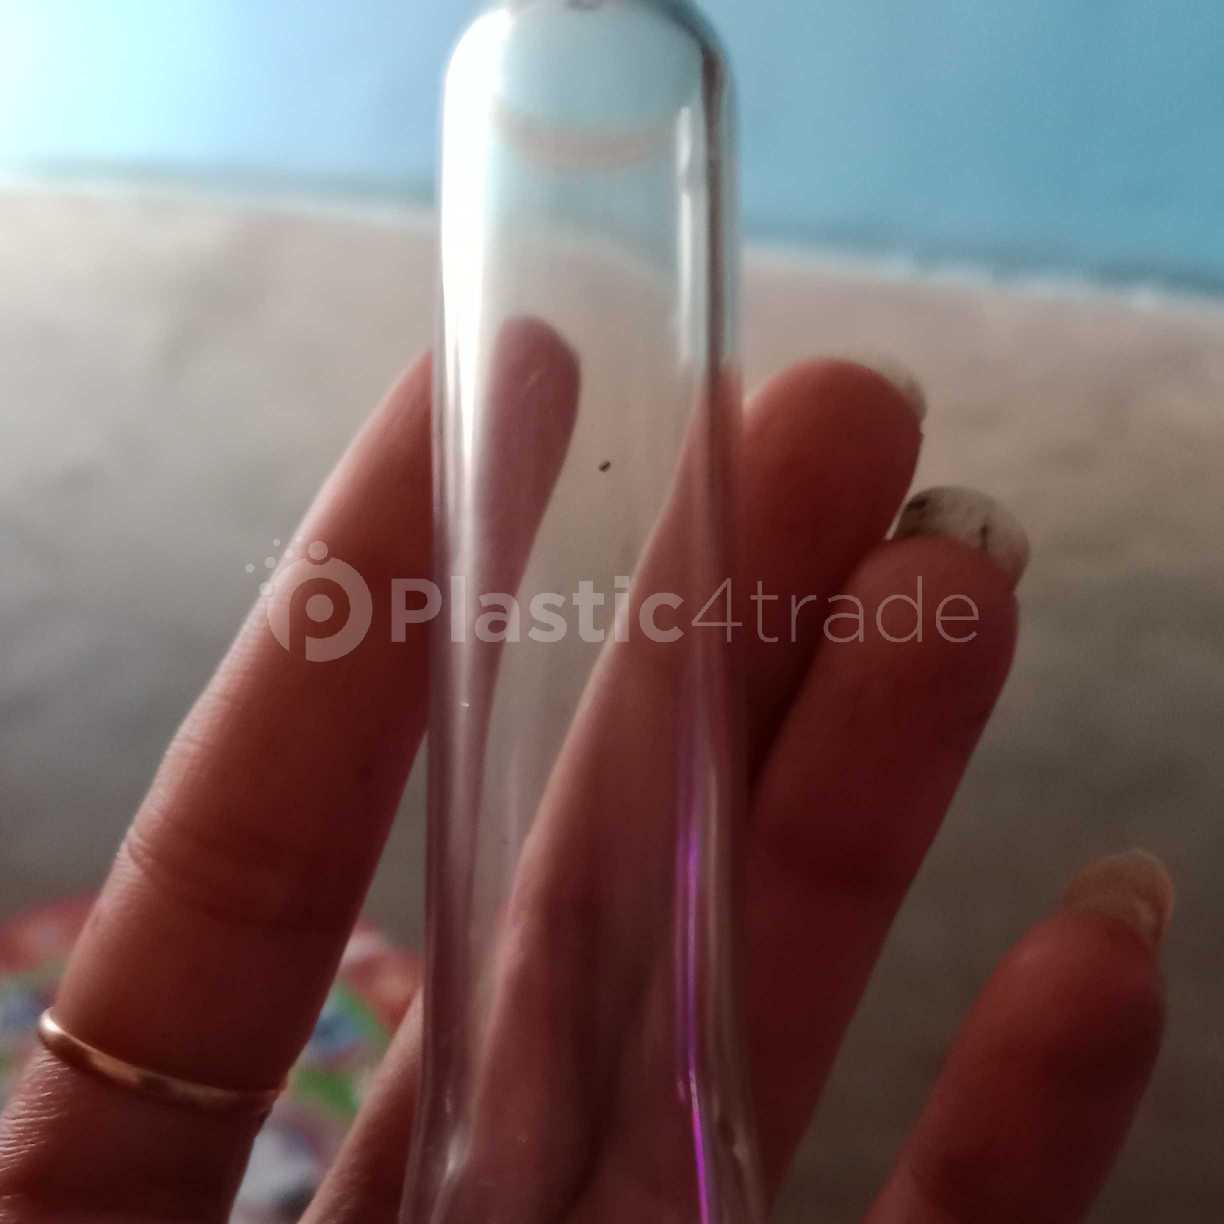 PET BOTTLE GRANUAL VERGIN PET Prime/Virgin Injection Molding madhya pradesh india Plastic4trade